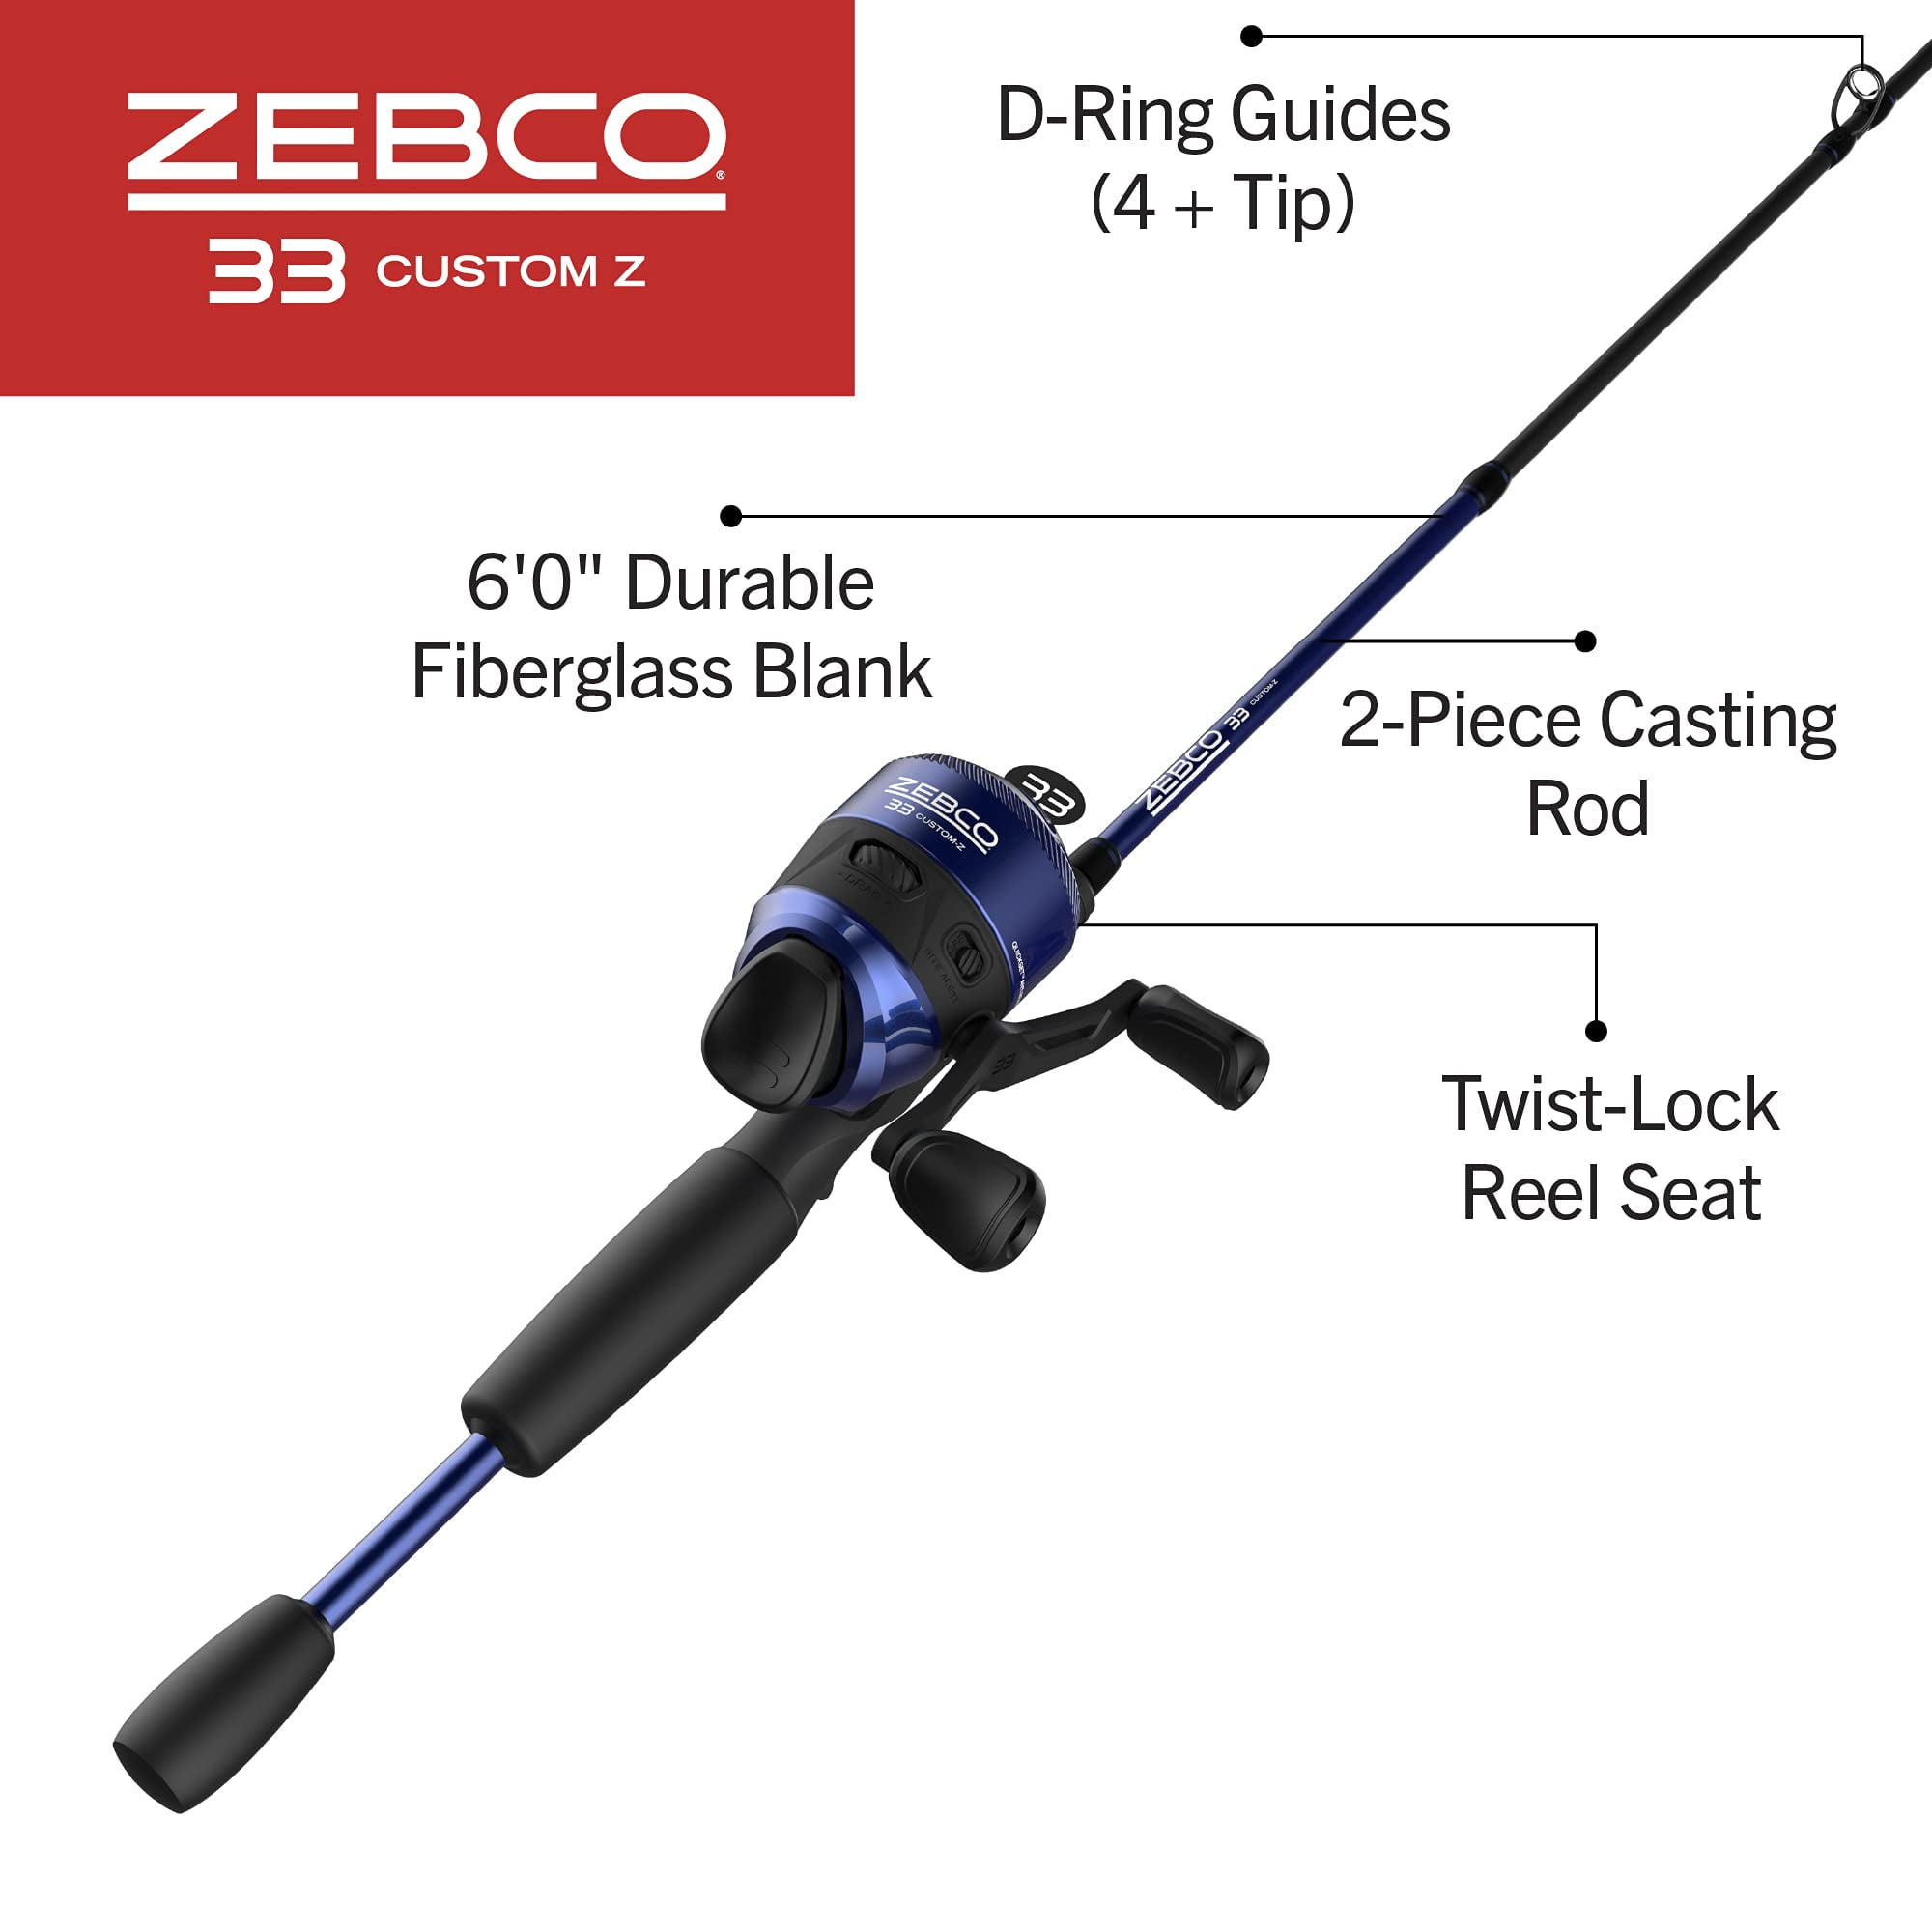 Zebco 33 Custom Z Spincast Reel and Fishing Rod Combo, 6-Foot